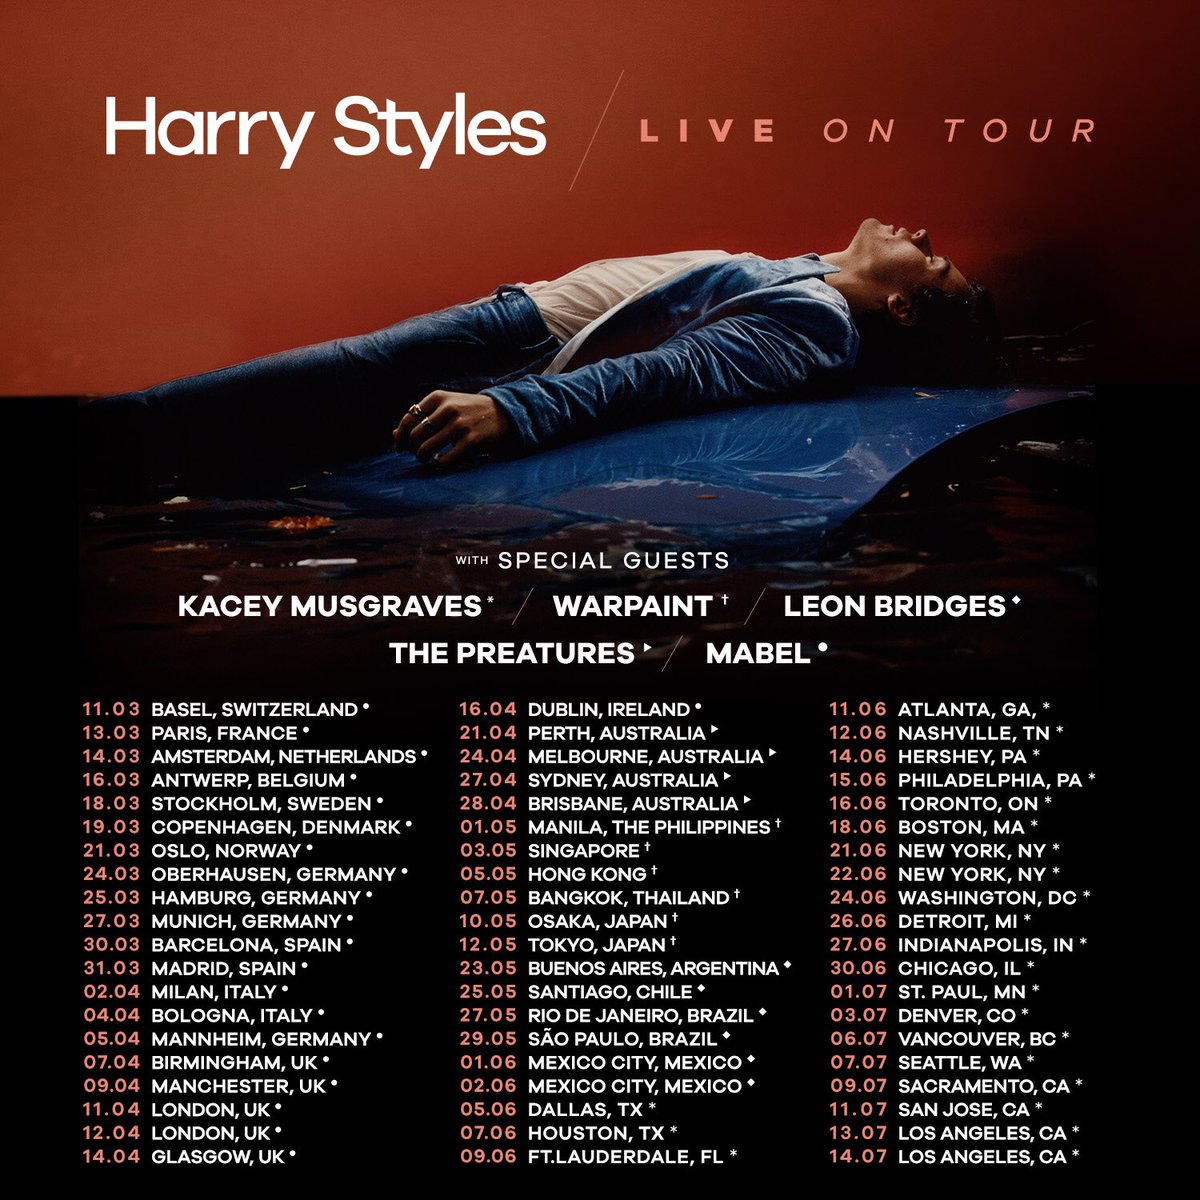 Harry Styles Love On Tour